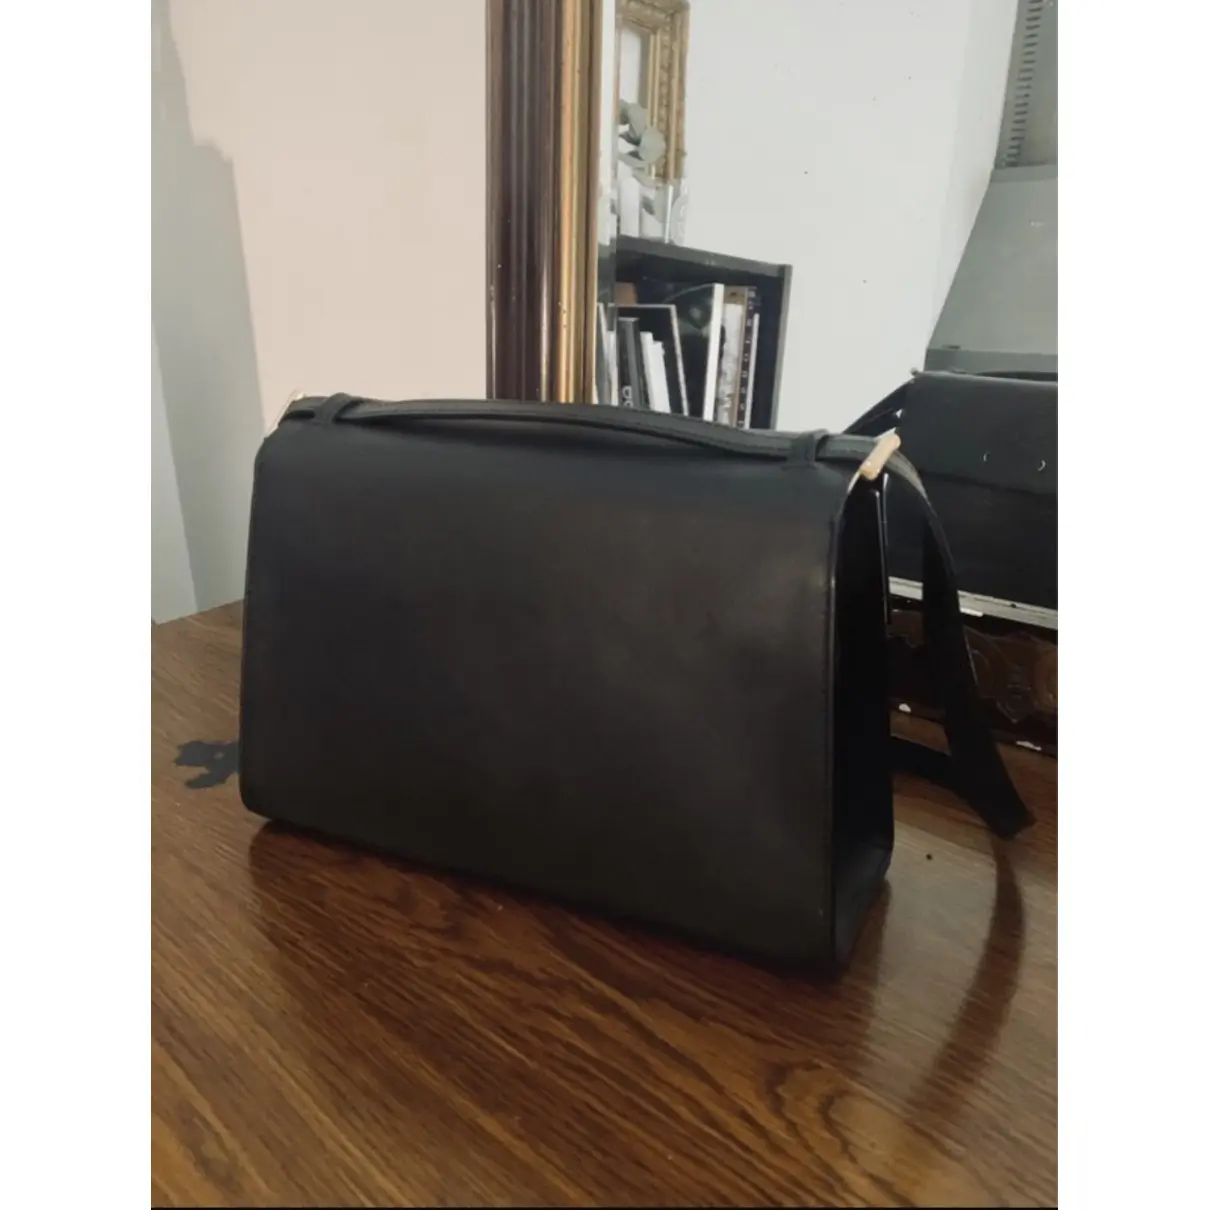 Buy PB 0110 Leather crossbody bag online